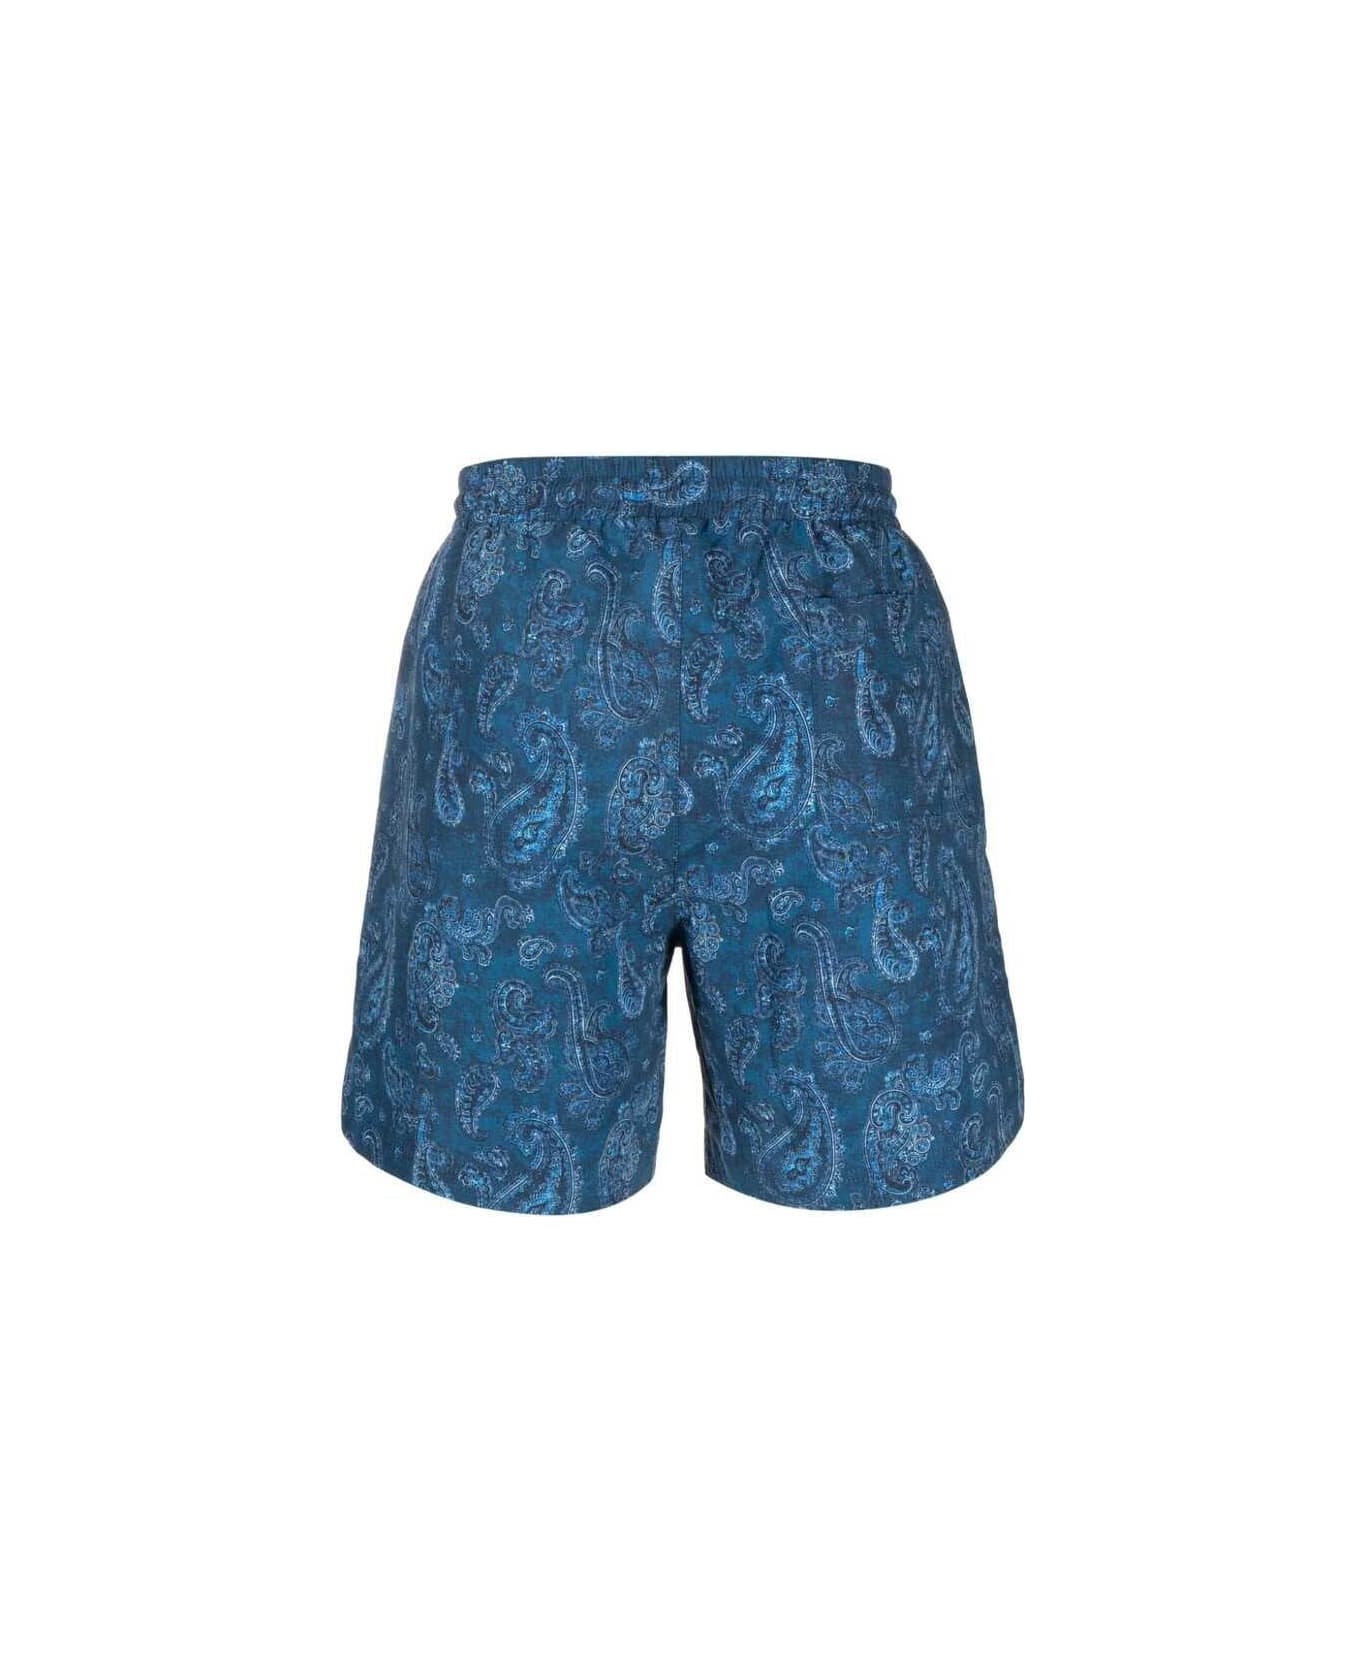 Brunello Cucinelli Drawstring Swim Shorts - BLUE/WHITE